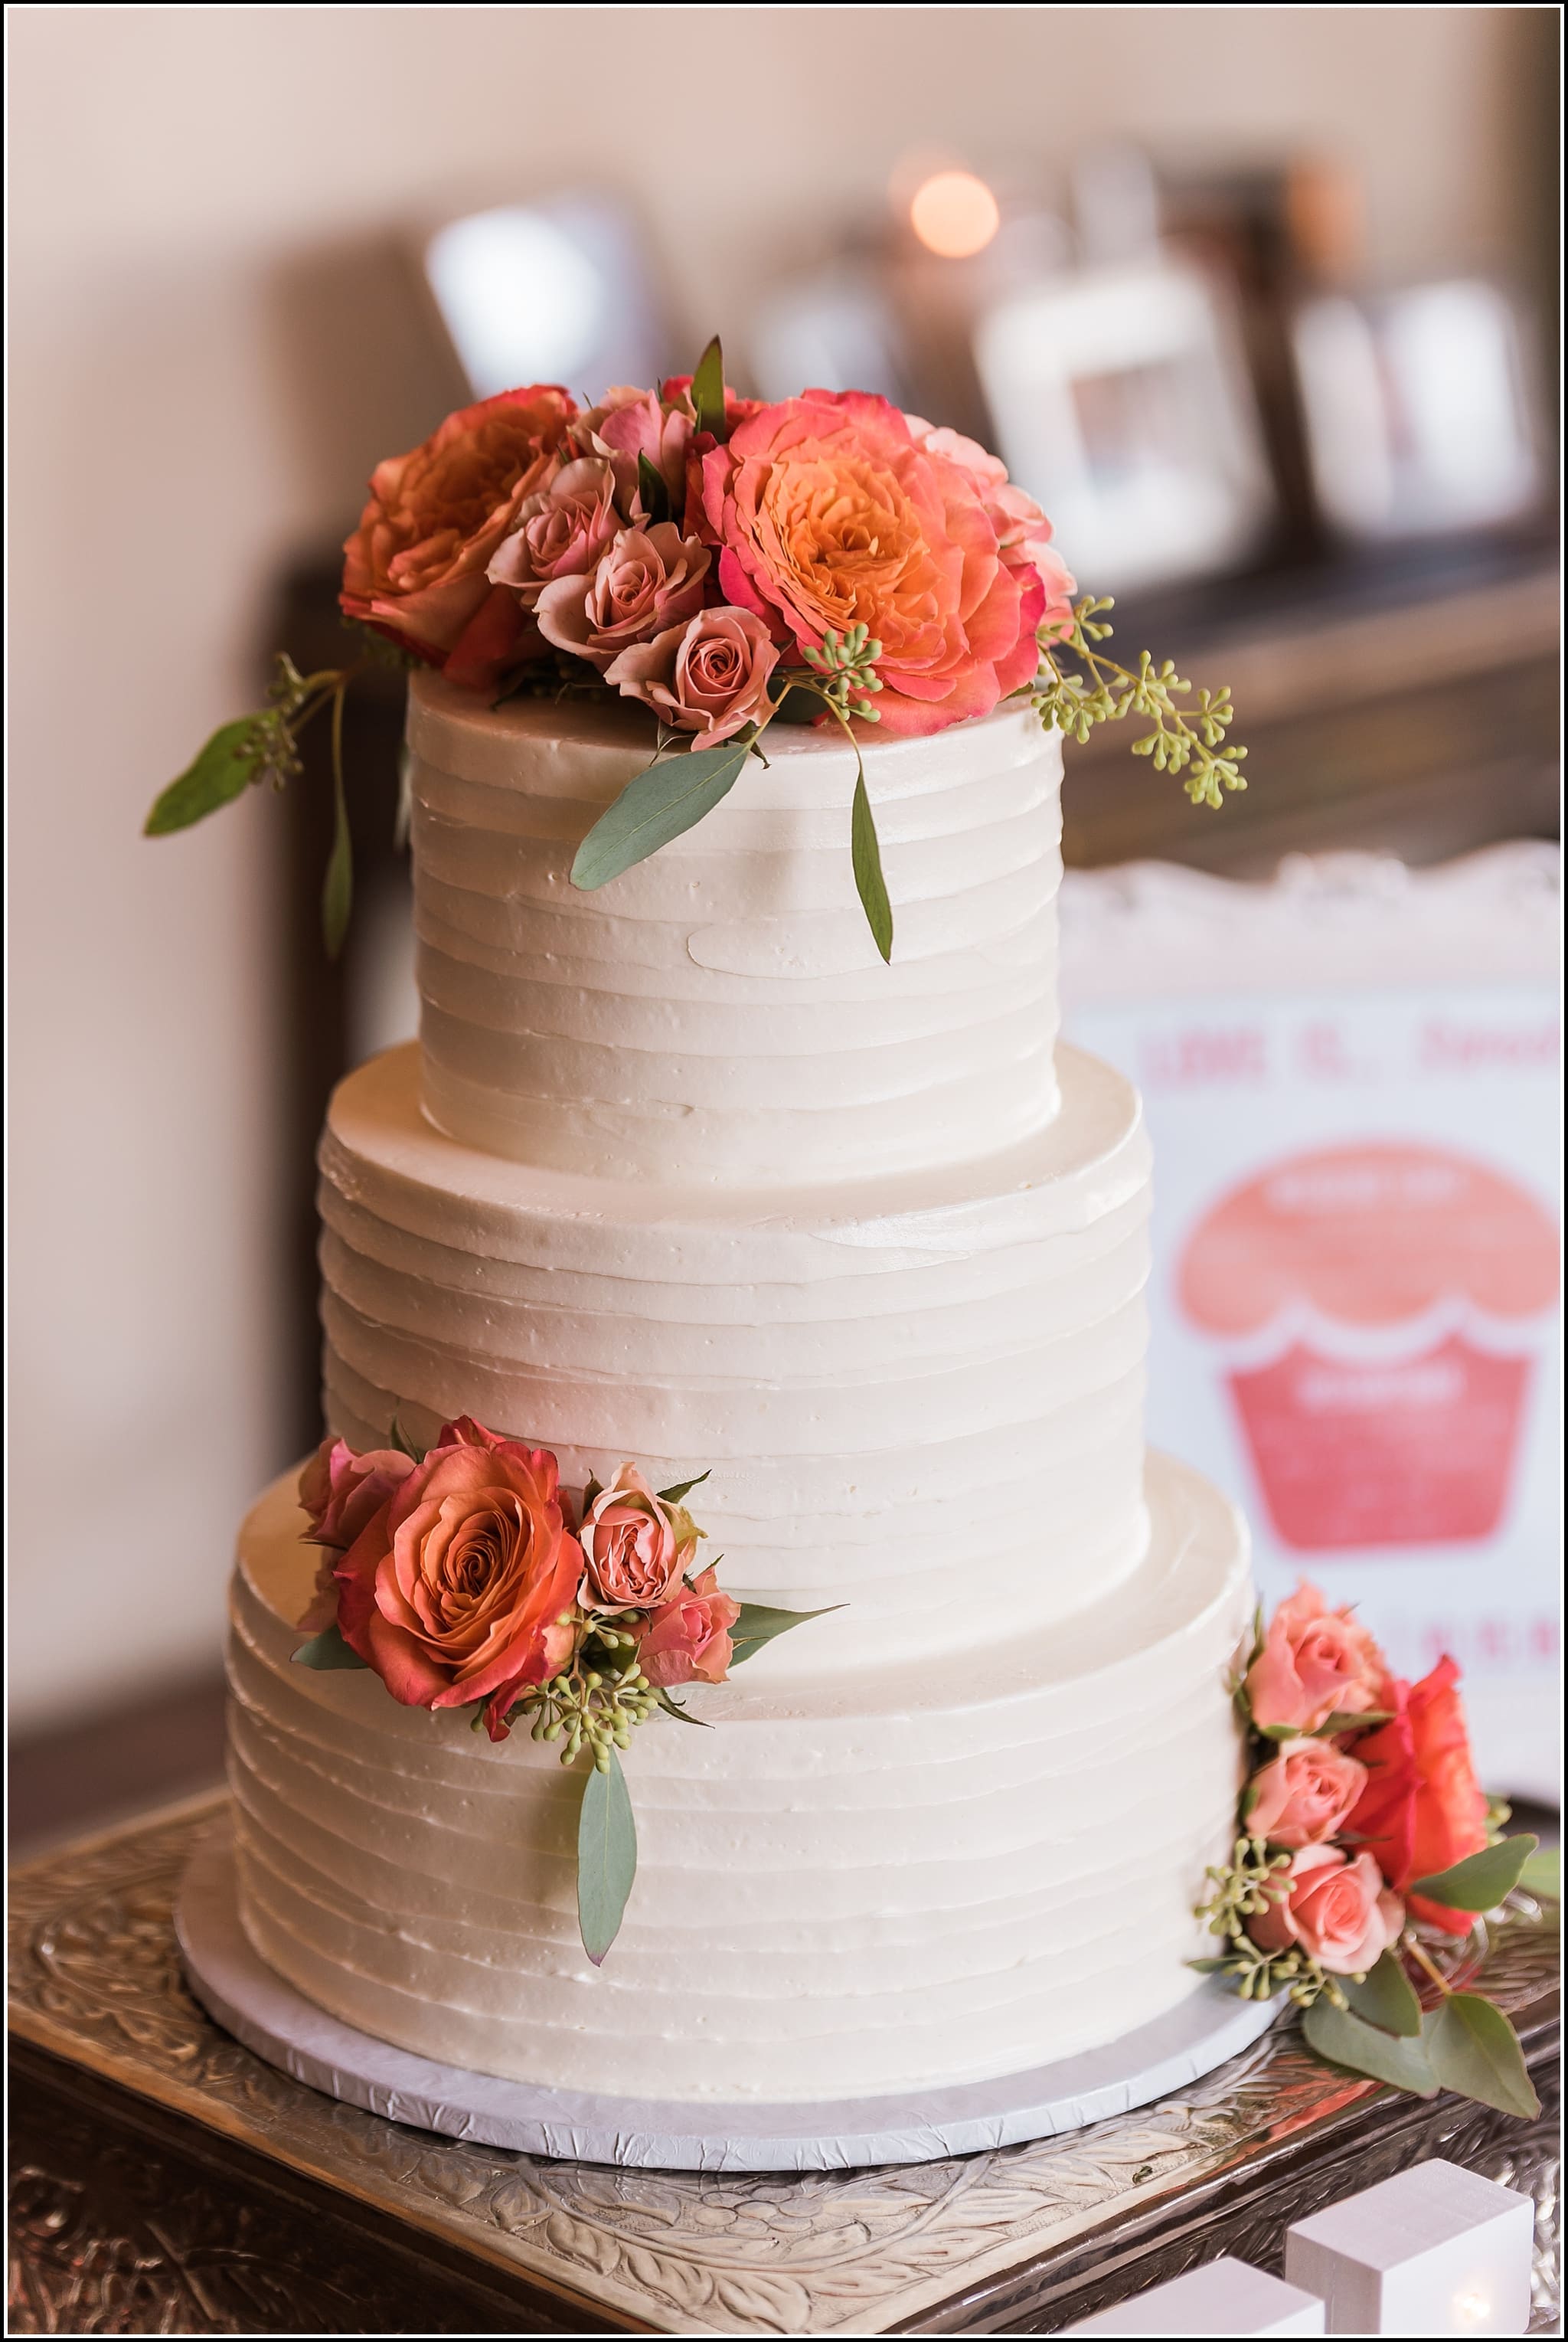  favorite wedding images 2016, wedding photos from 2016, our favorite wedding photos, exquisite desserts wedding cake